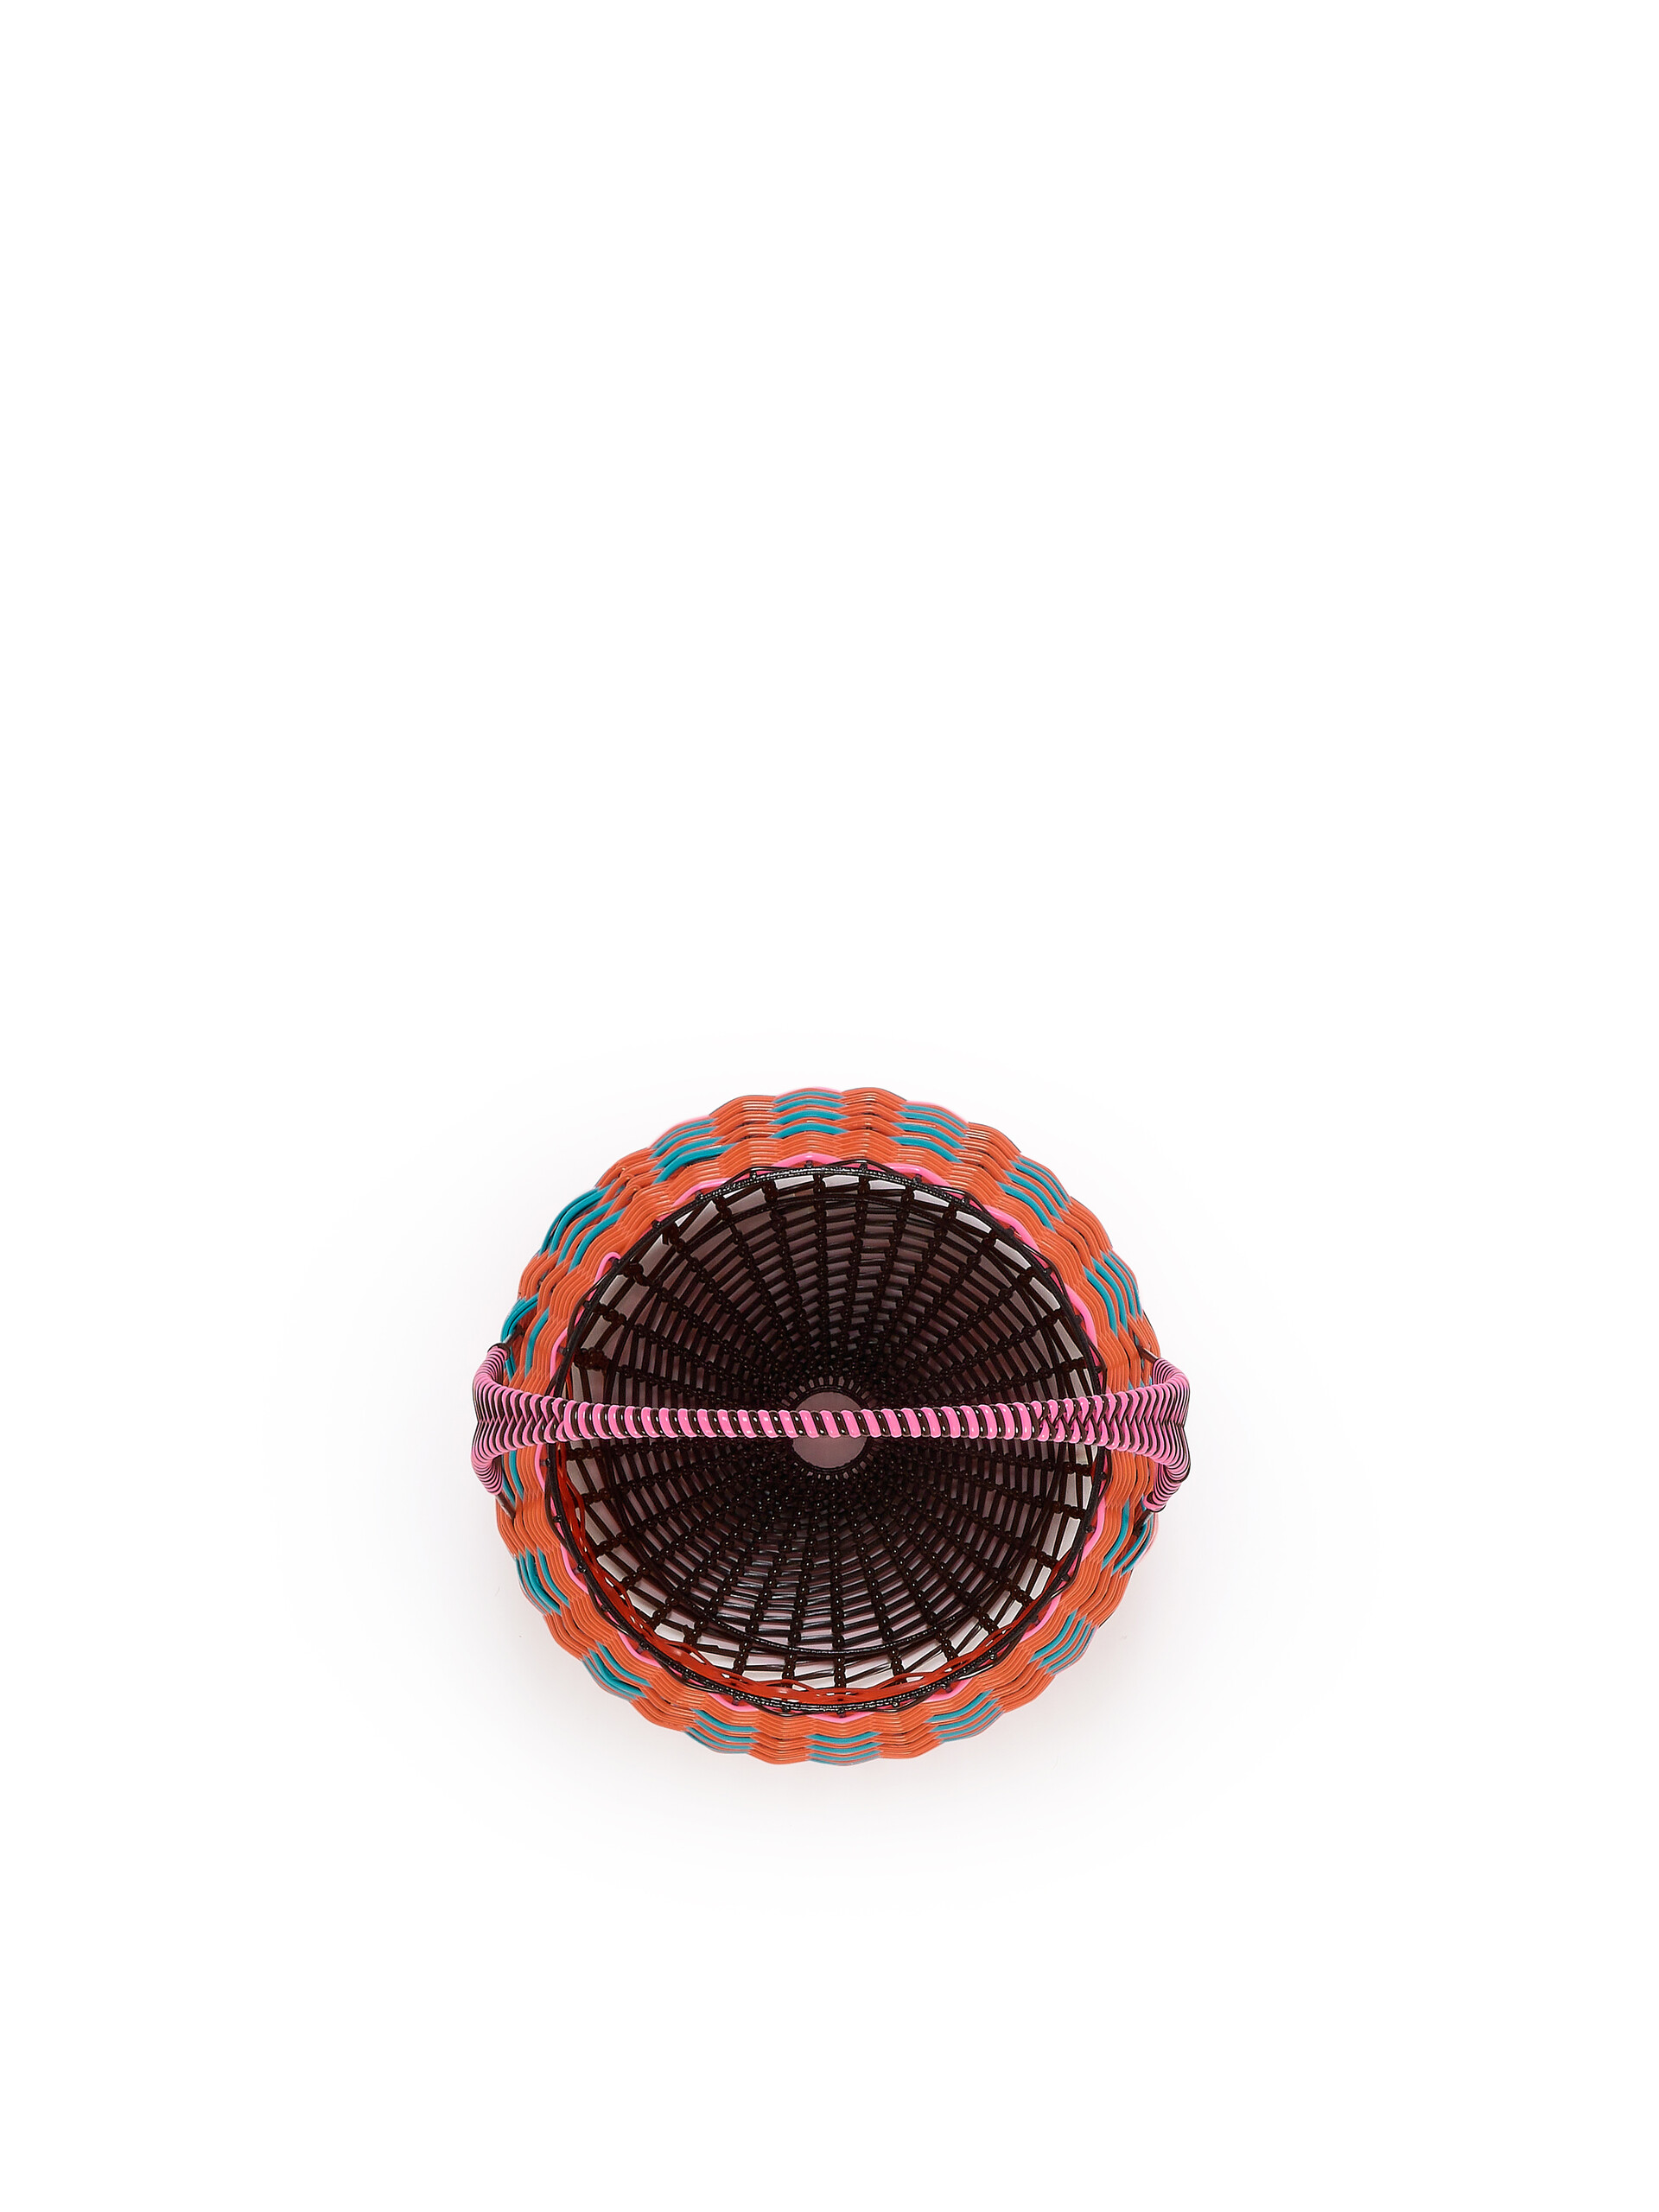 Orange MARNI MARKET woven cable basket - Accessories - Image 4